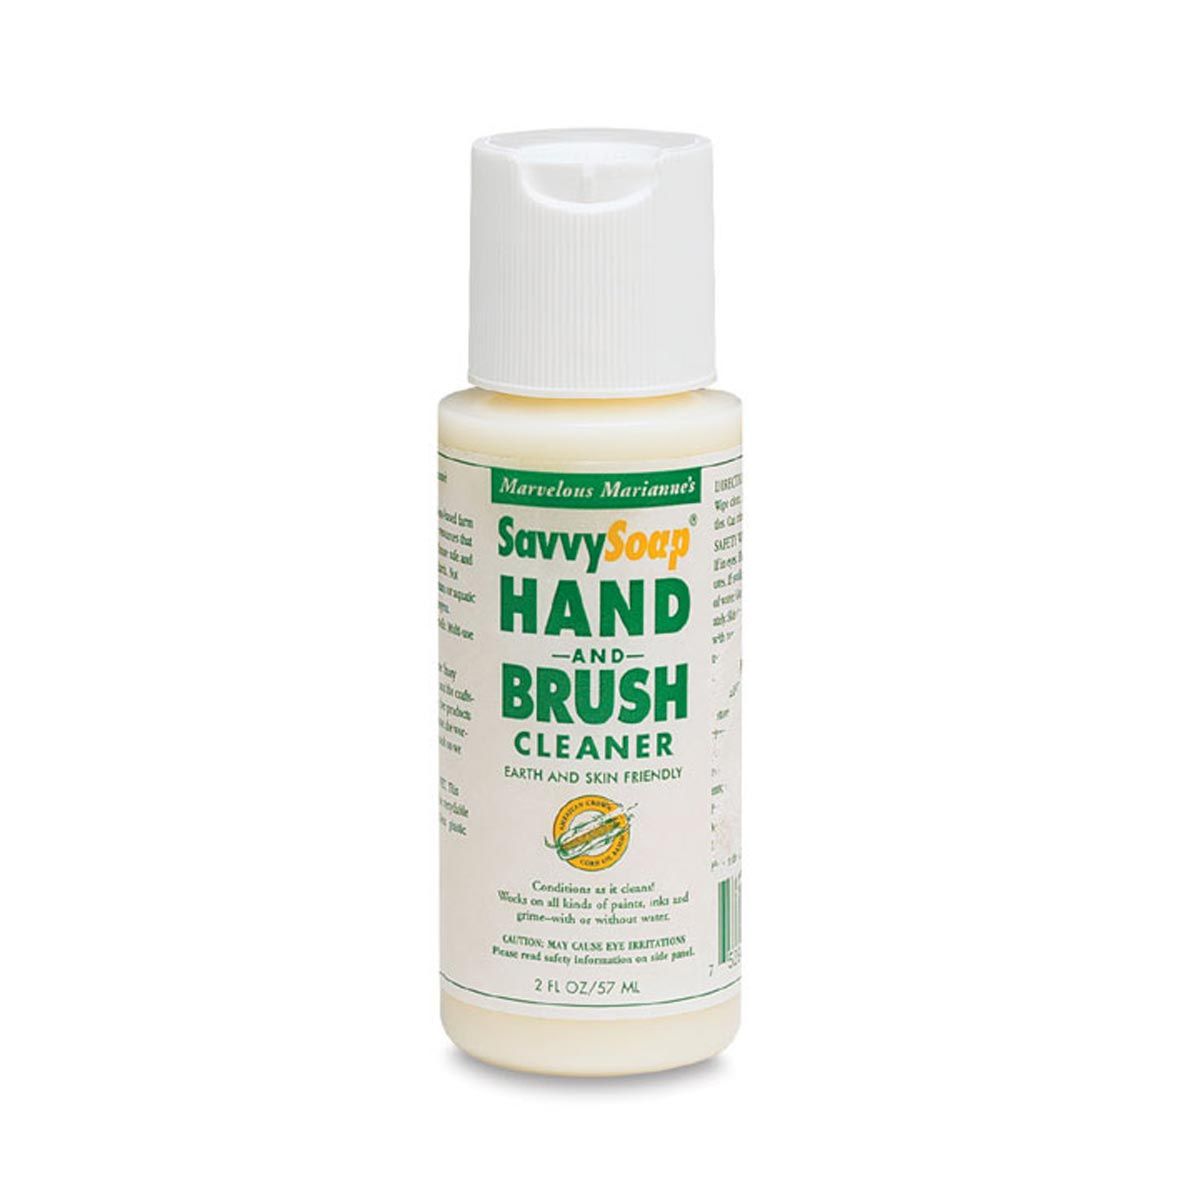 Savvy Hand & Brush Cleaner Size 2fl oz.